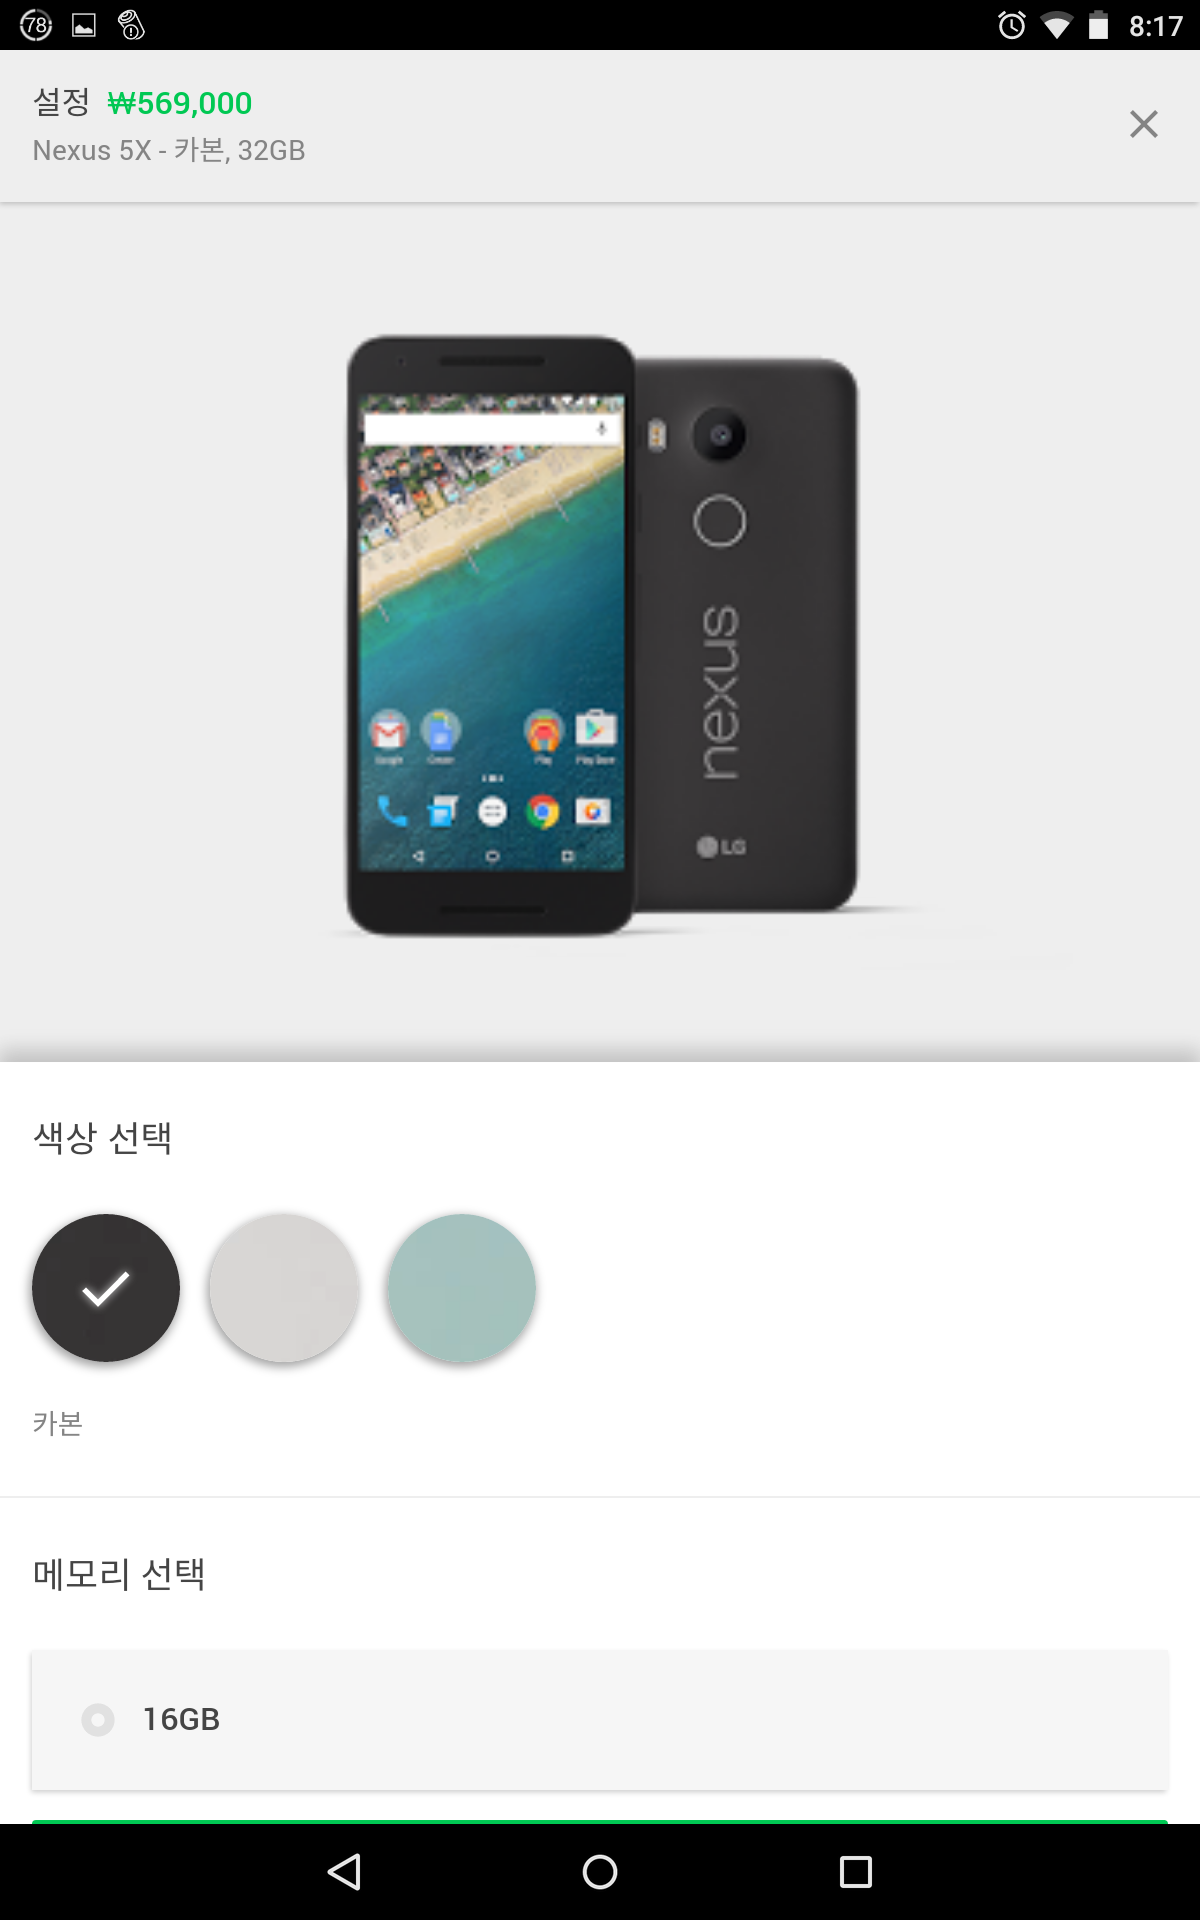 Screenshot_2015-10-12-20-17-52.png 신형 넥서스 5, Nexus 5X 예약판매 중